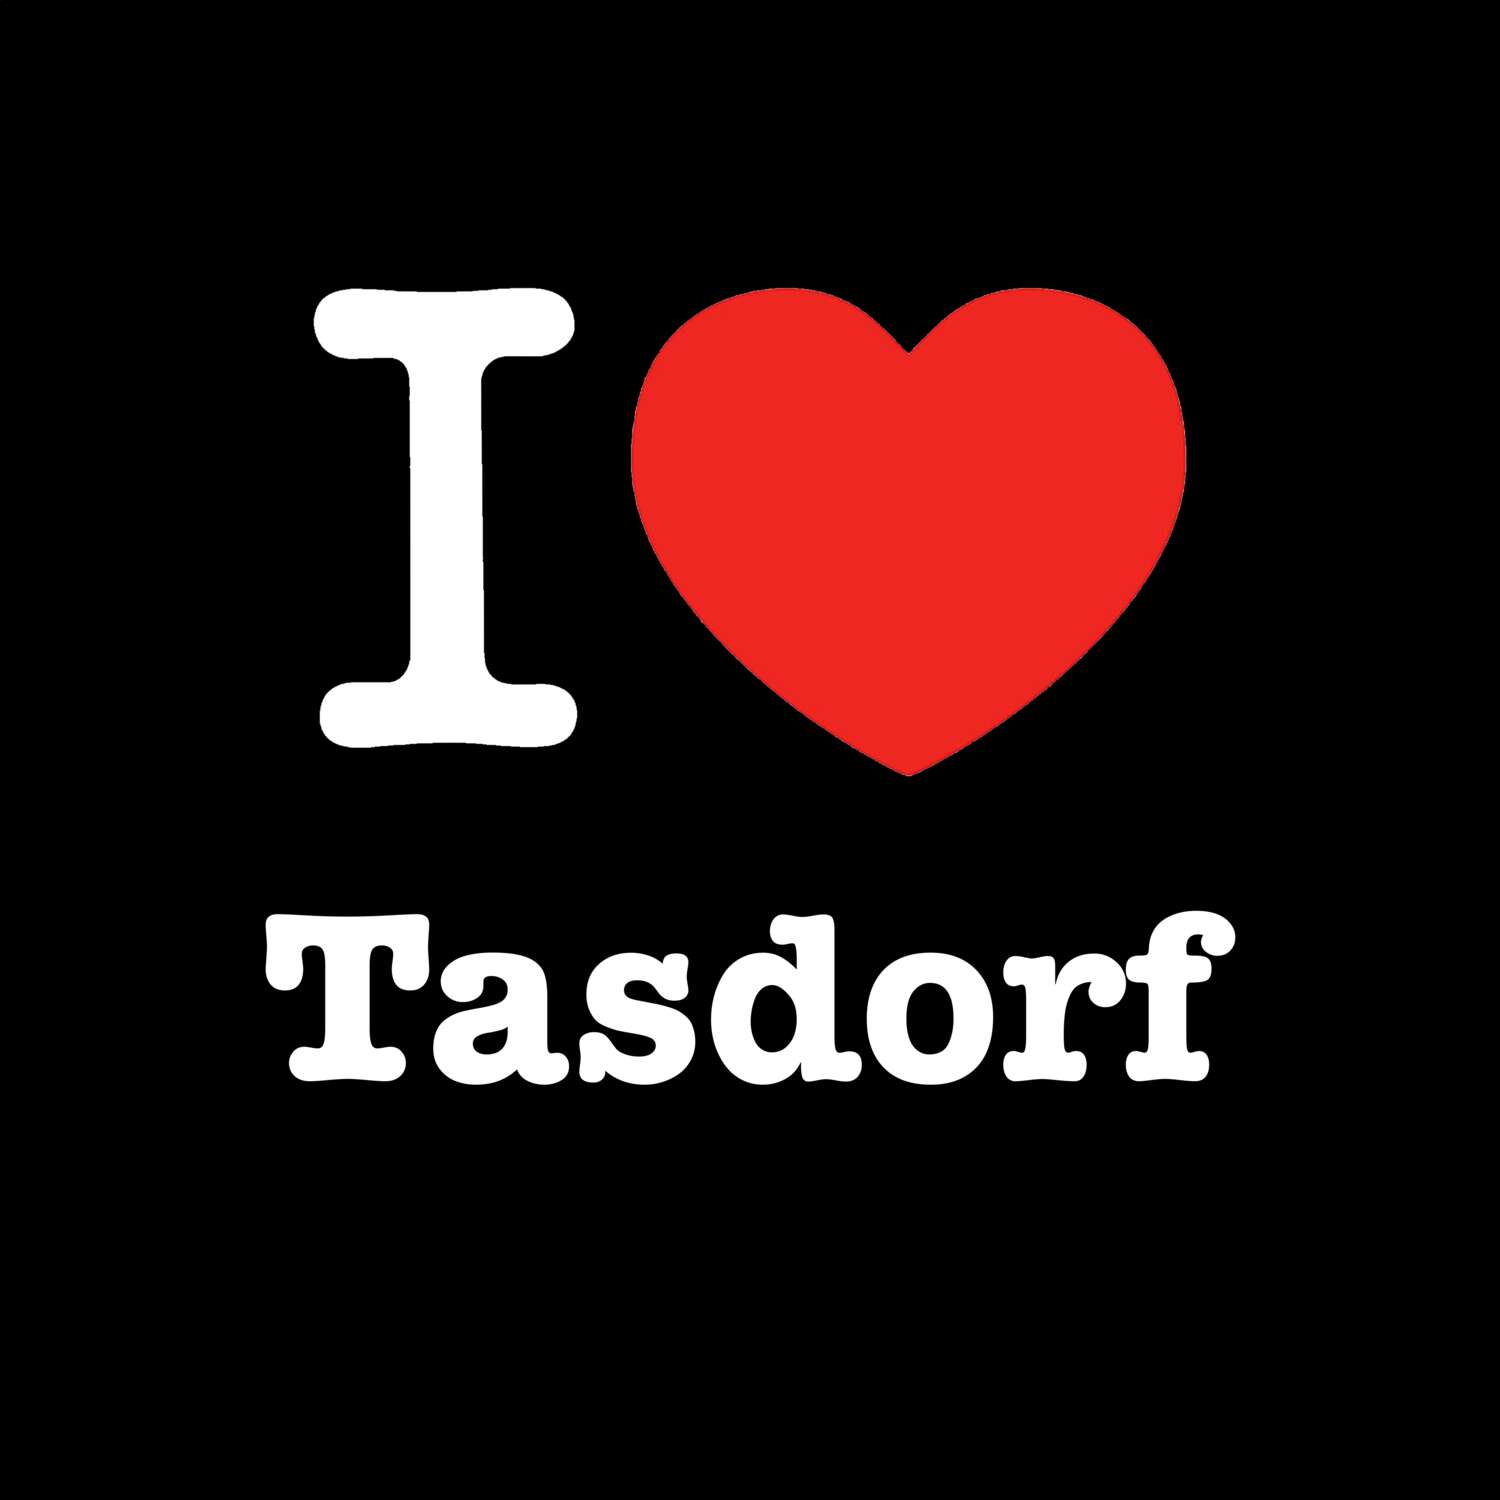 Tasdorf T-Shirt »I love«